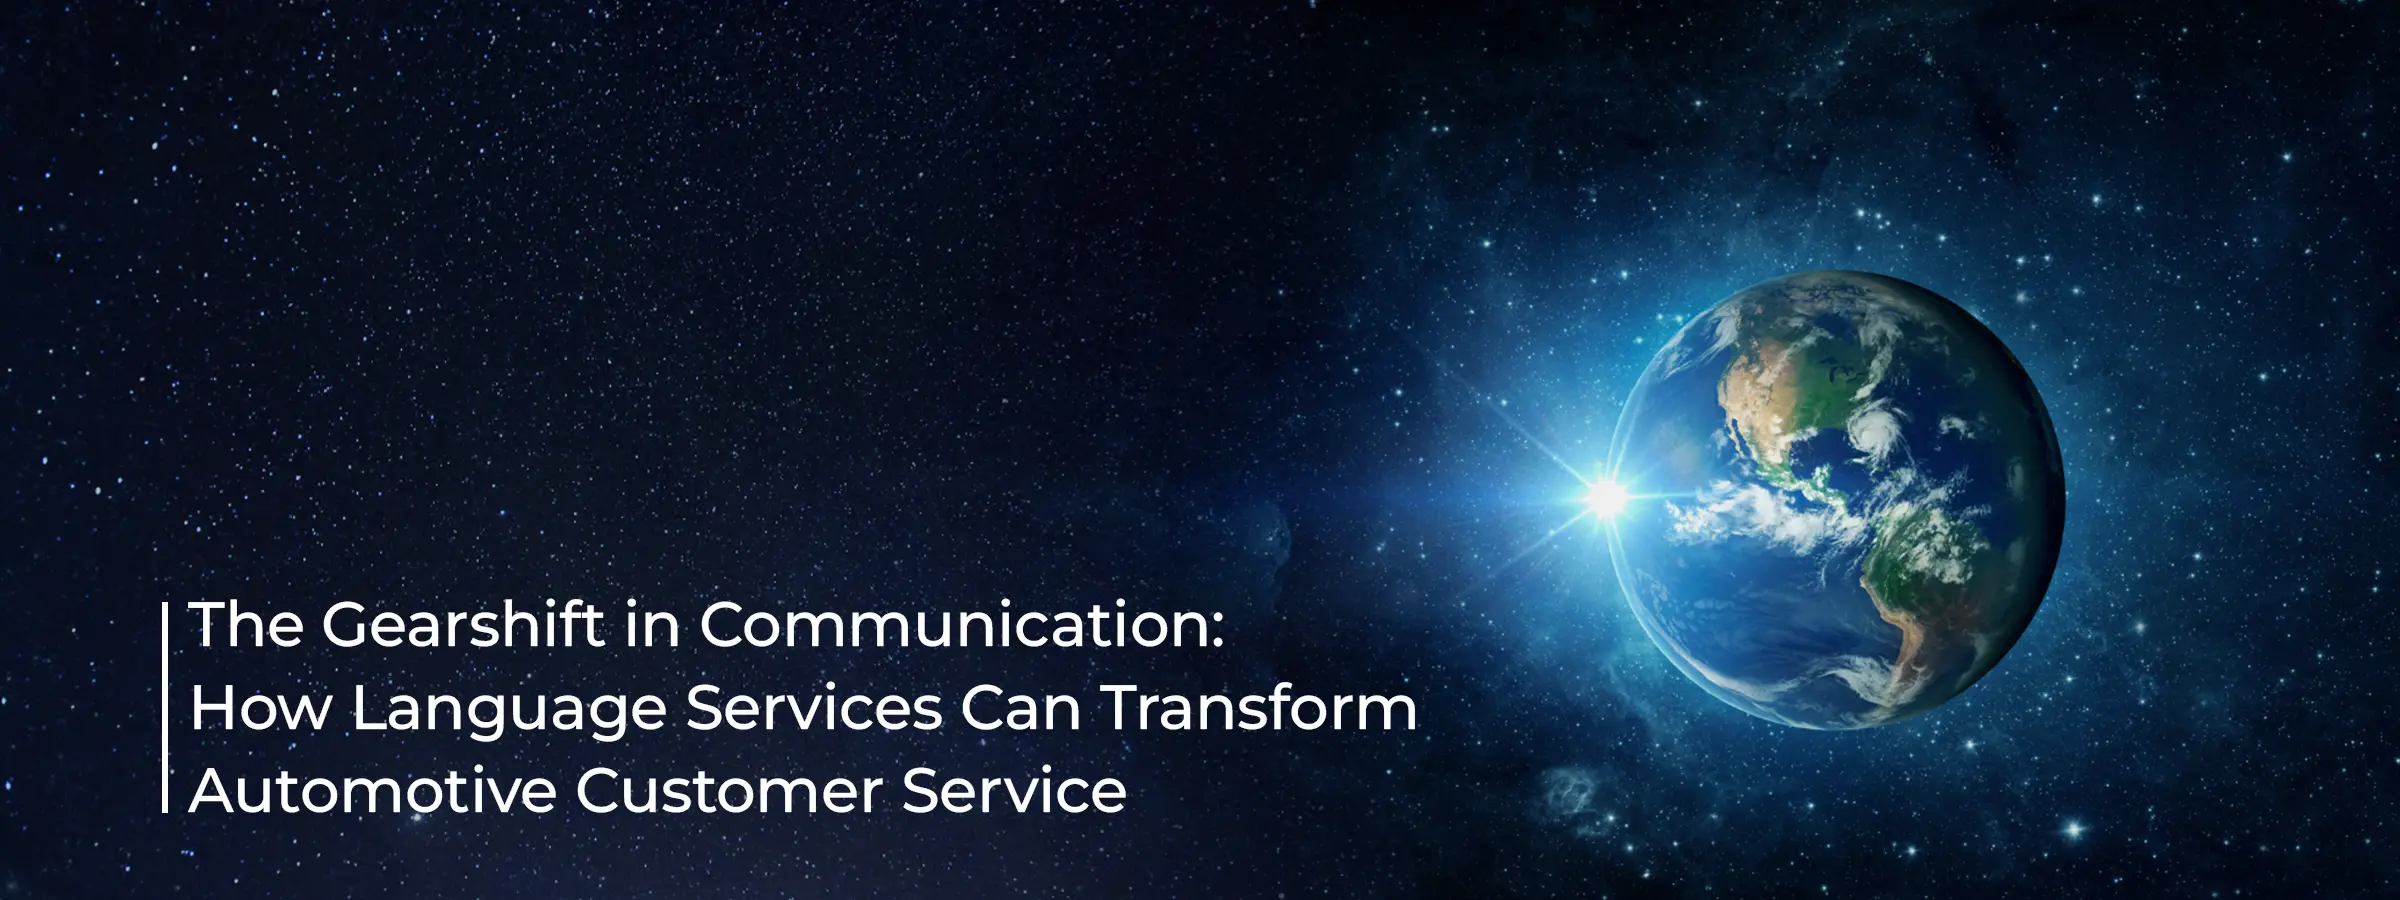 language-services-can-transform-automotive-customer-service